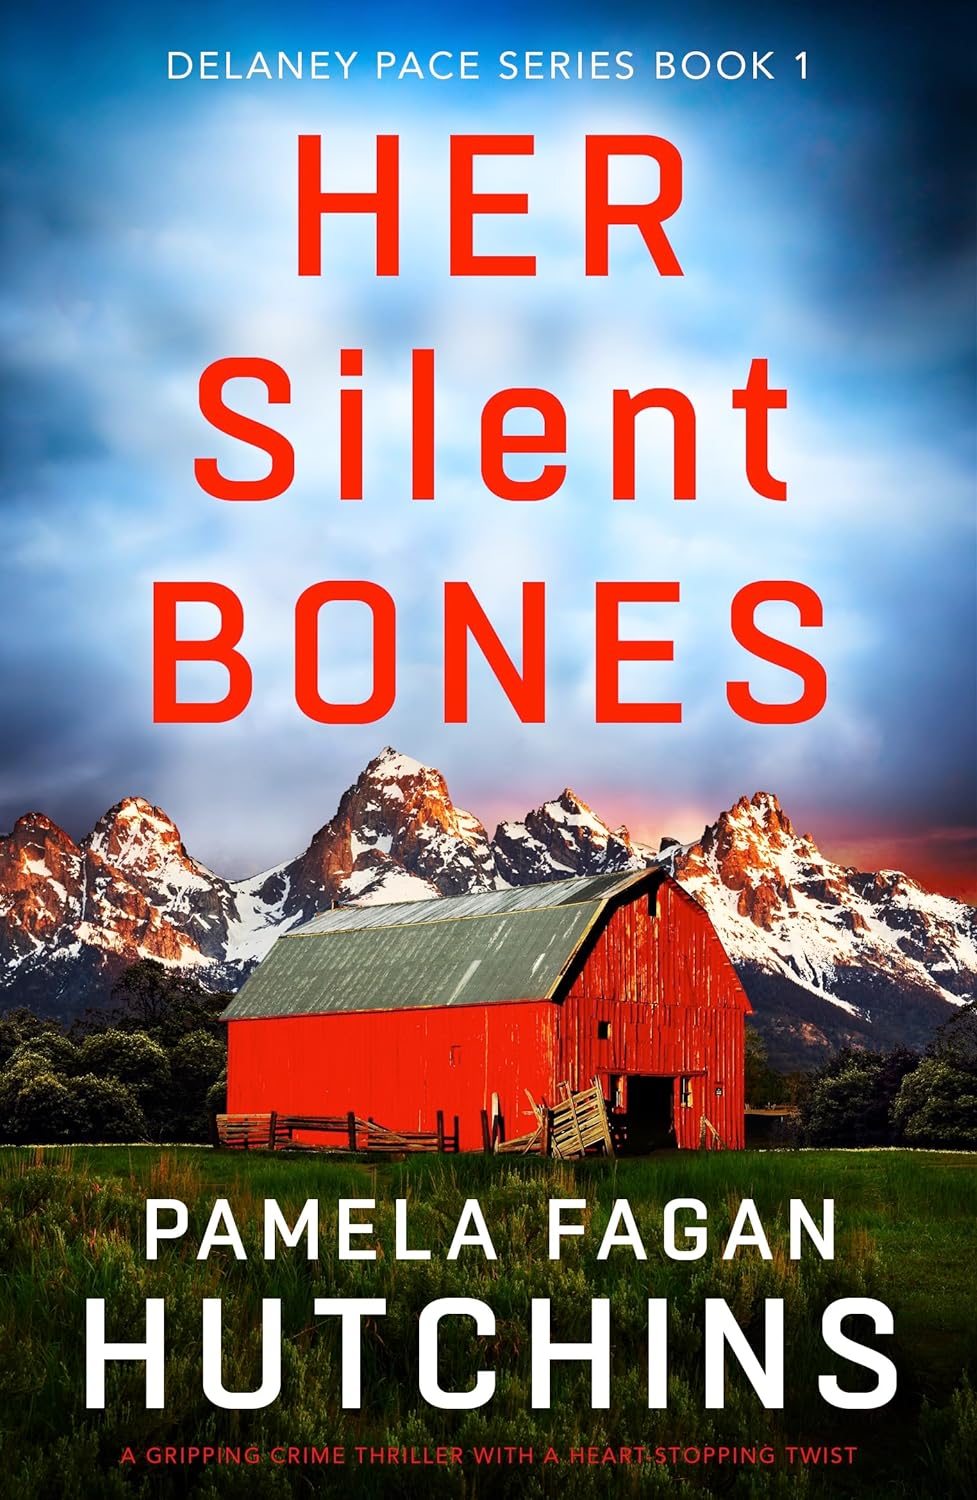 Her Silent Bones by Pamela Fagan Hutchins